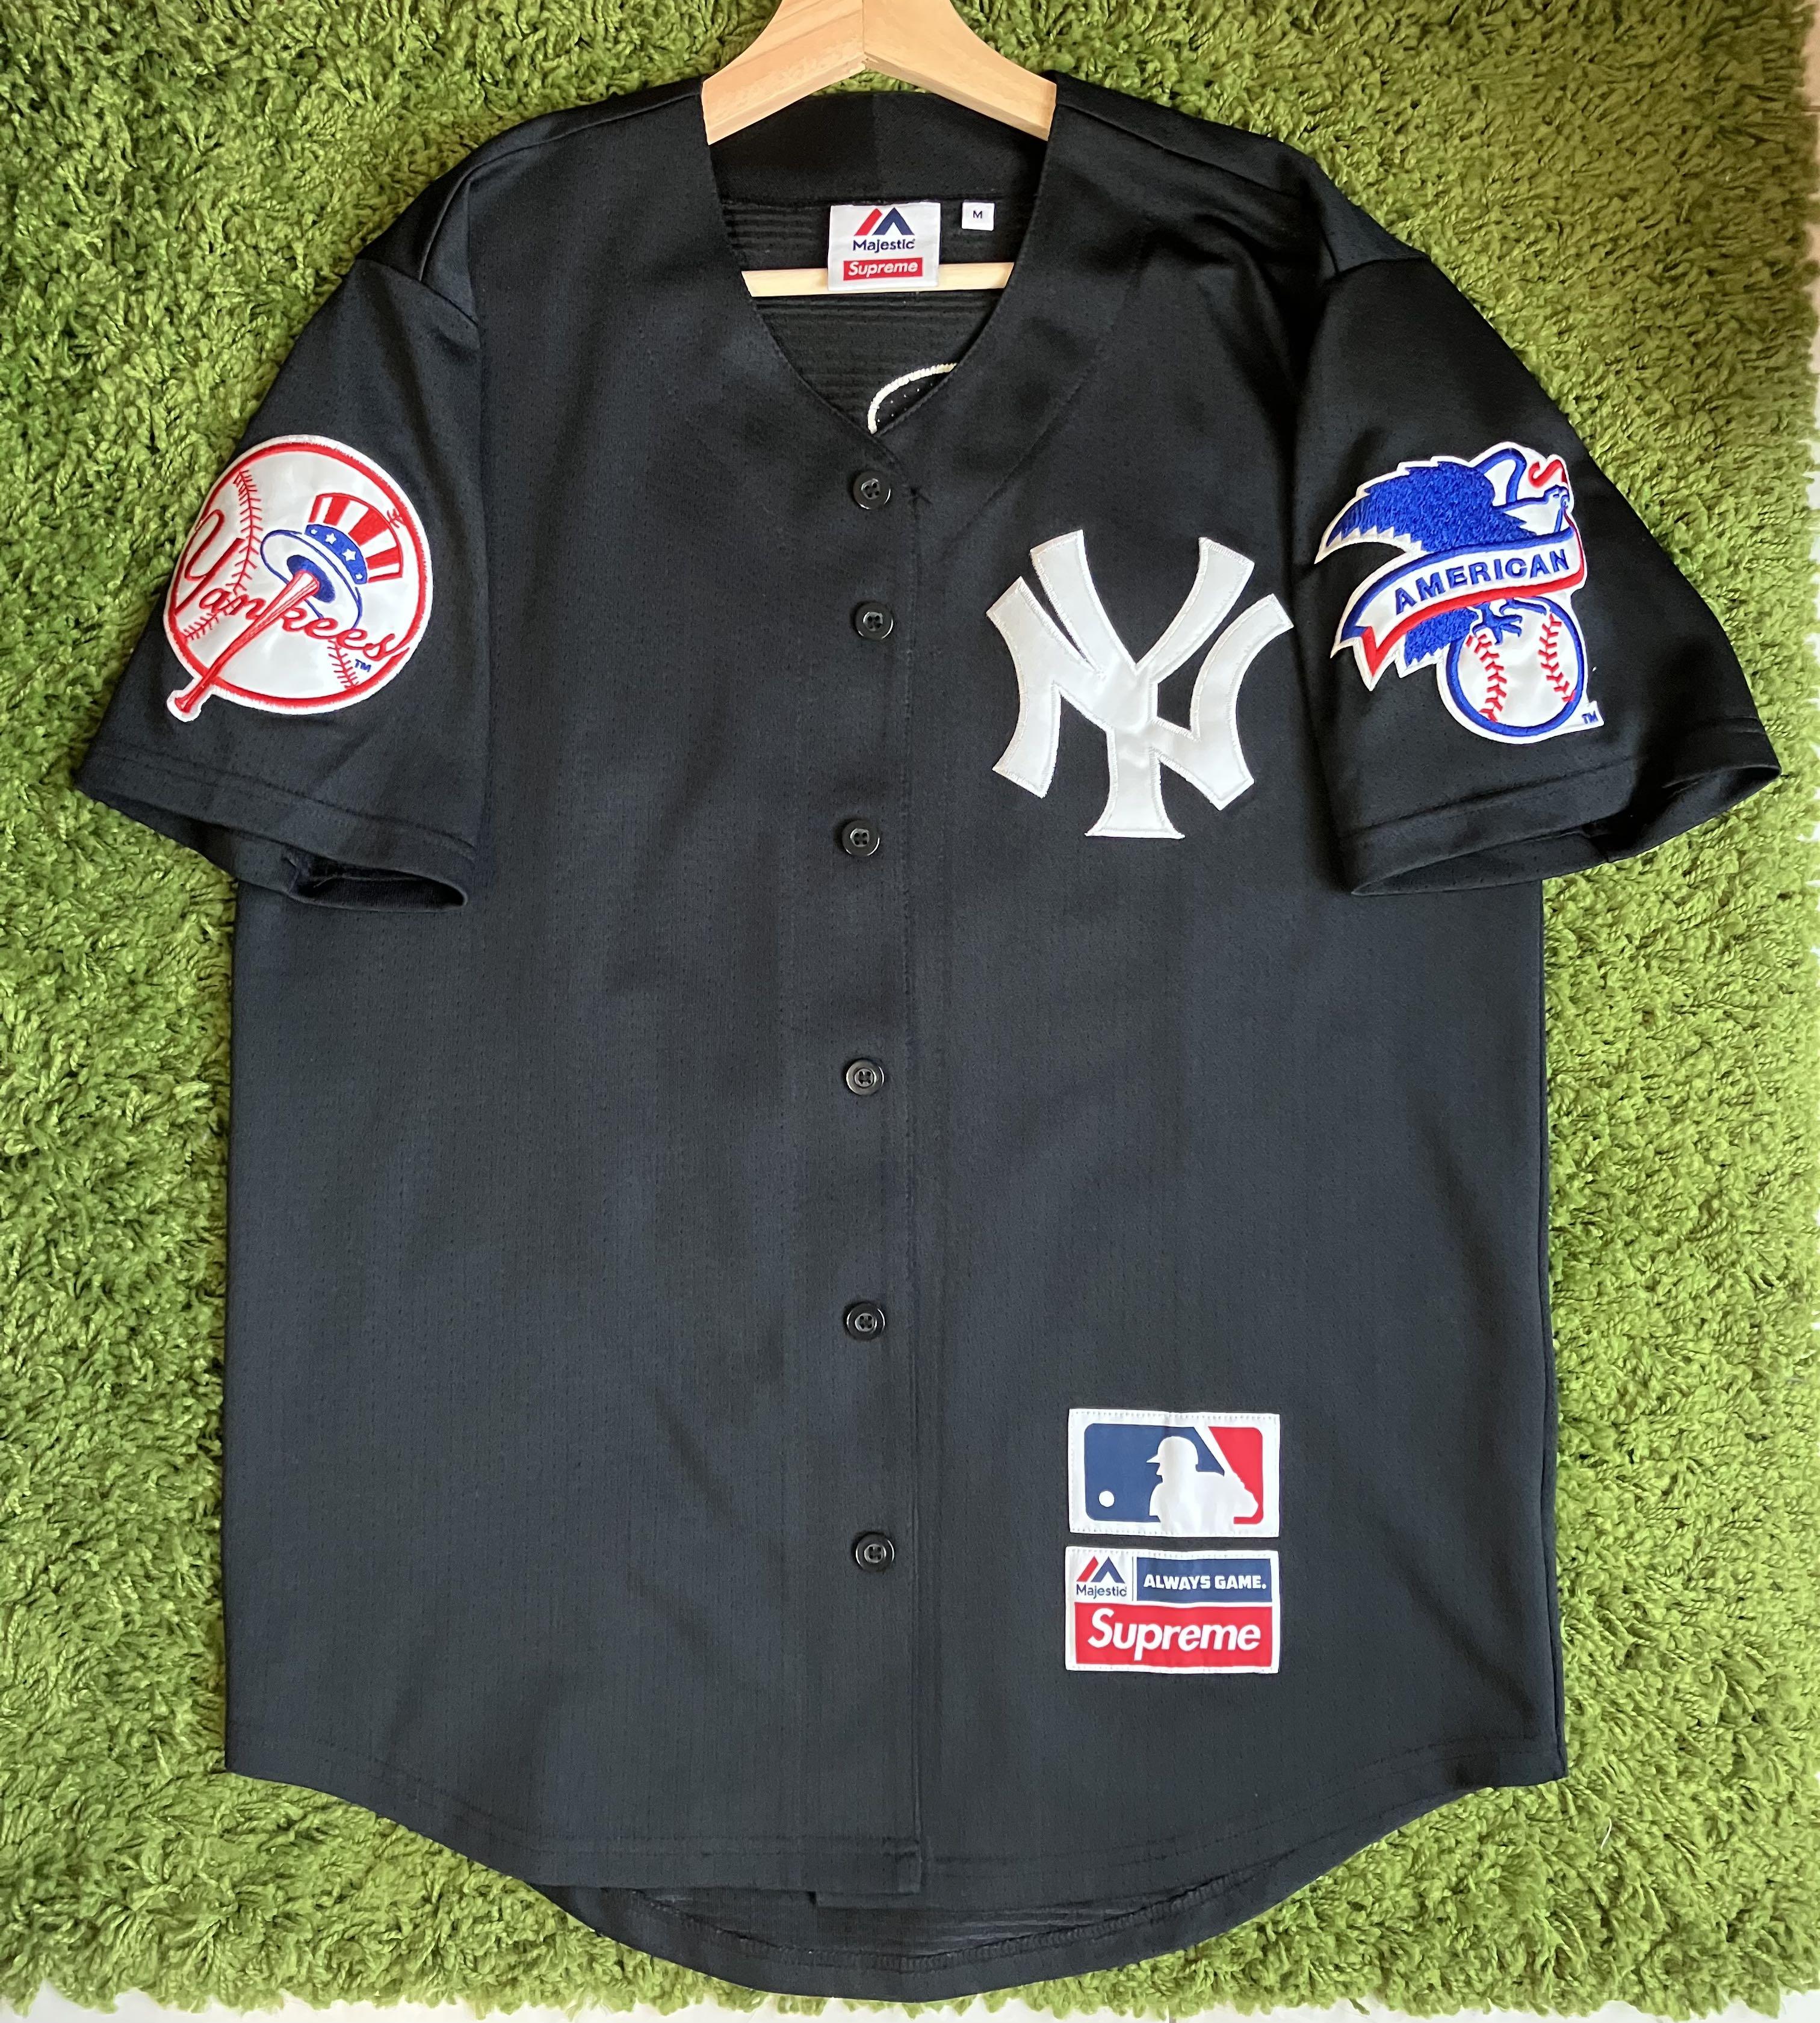 Ss15 Supreme Yankees Baseball Jersey size:m棒球襯衫